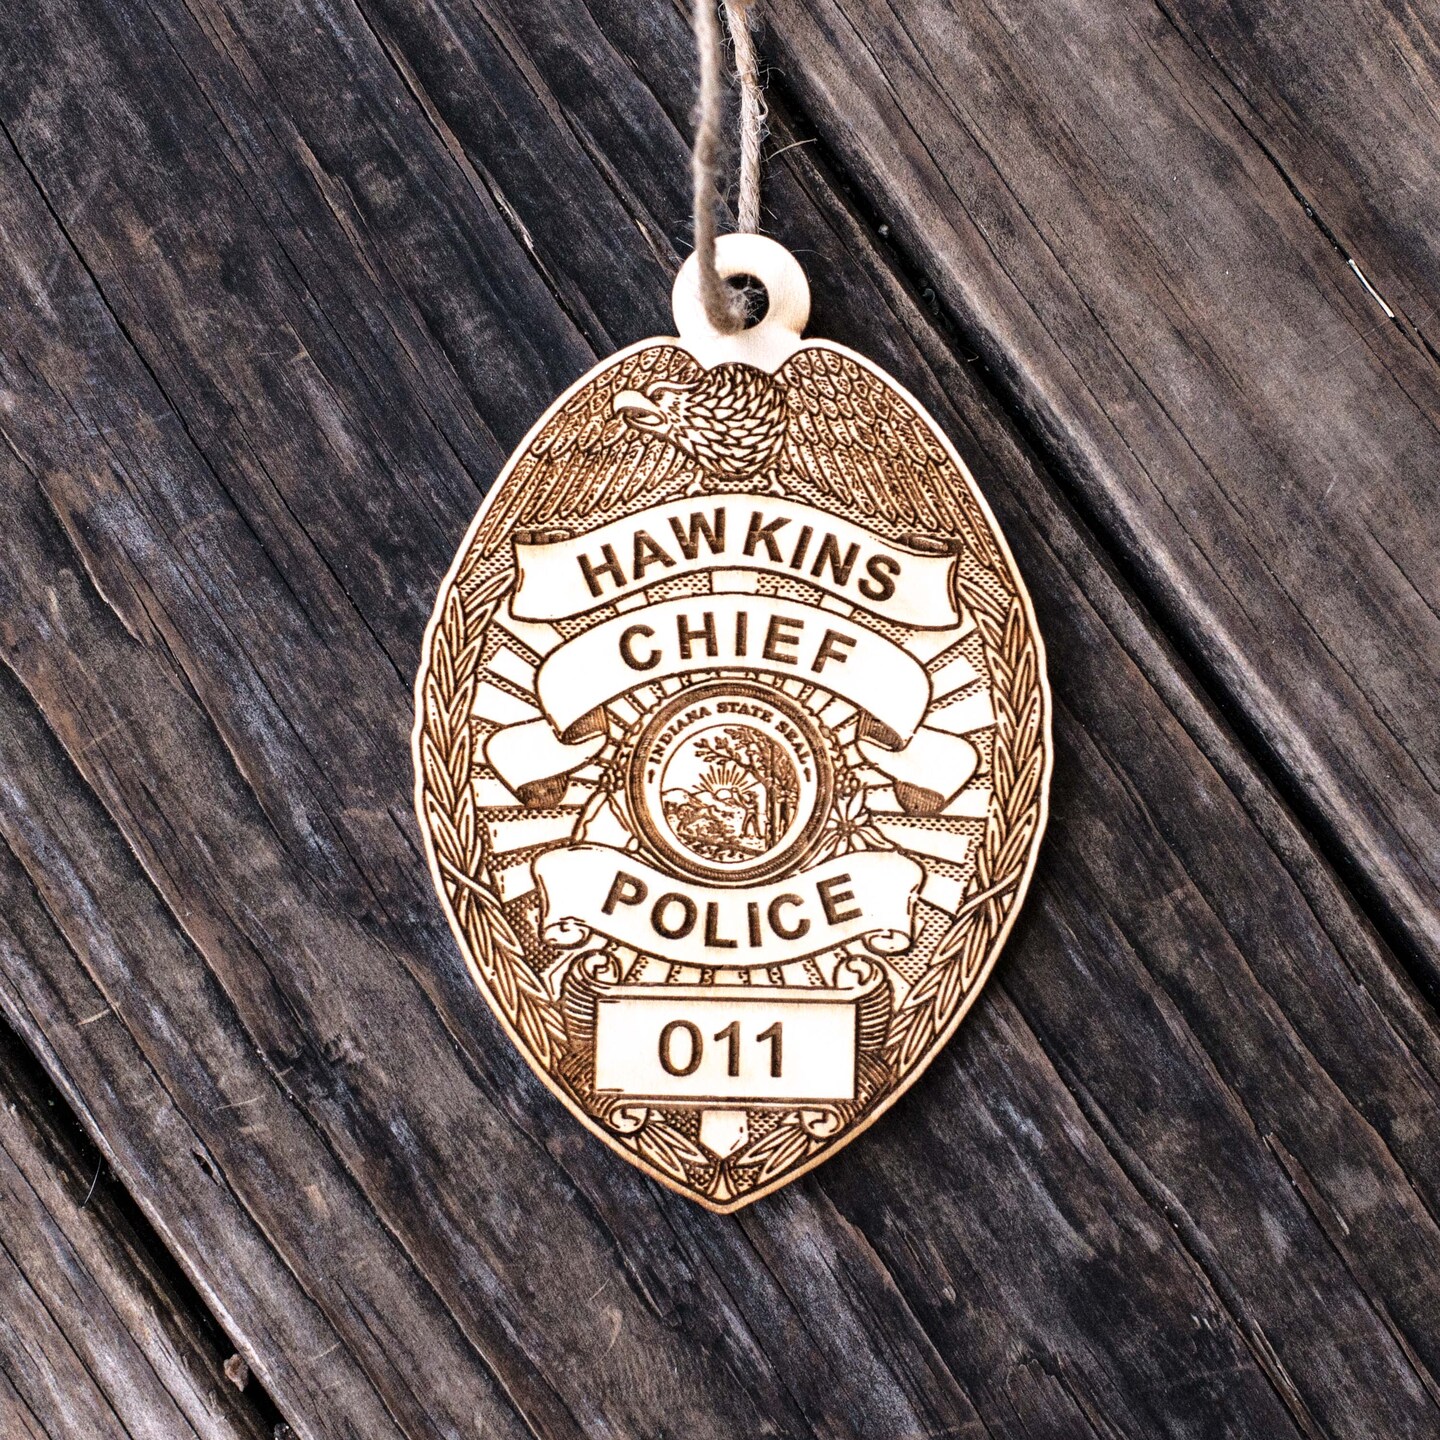 Ornament - Hawkins Chief of Police - Raw Wood 3x4.5in